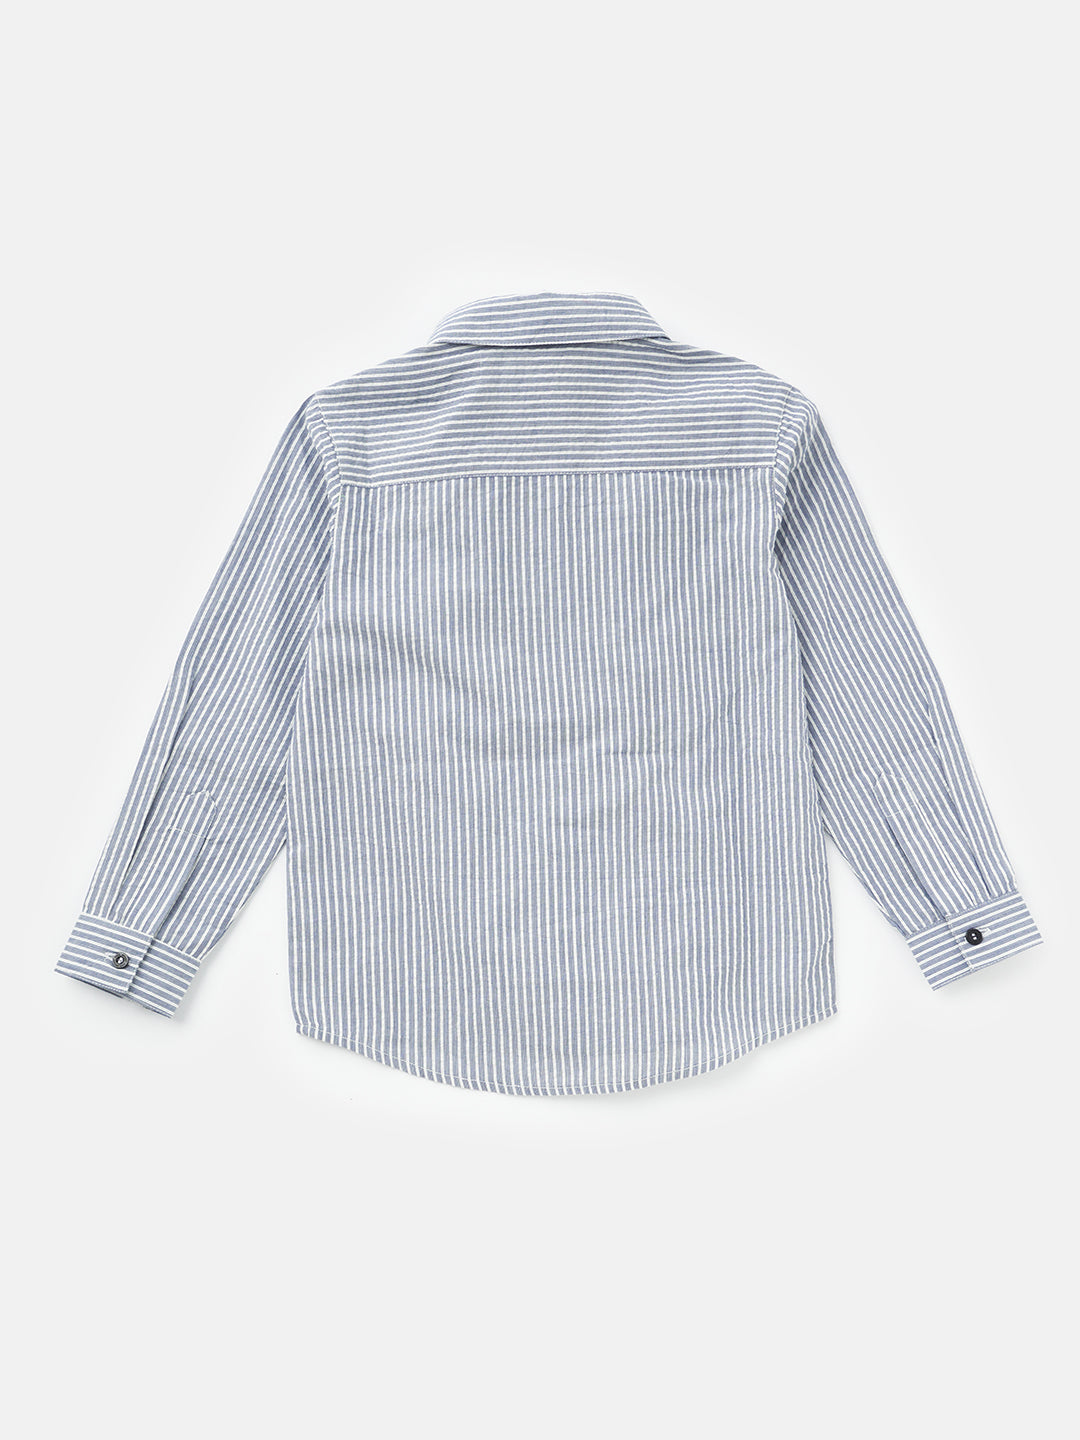 Boys Blue Vertical Striped Full Sleeves Cotton Shirt